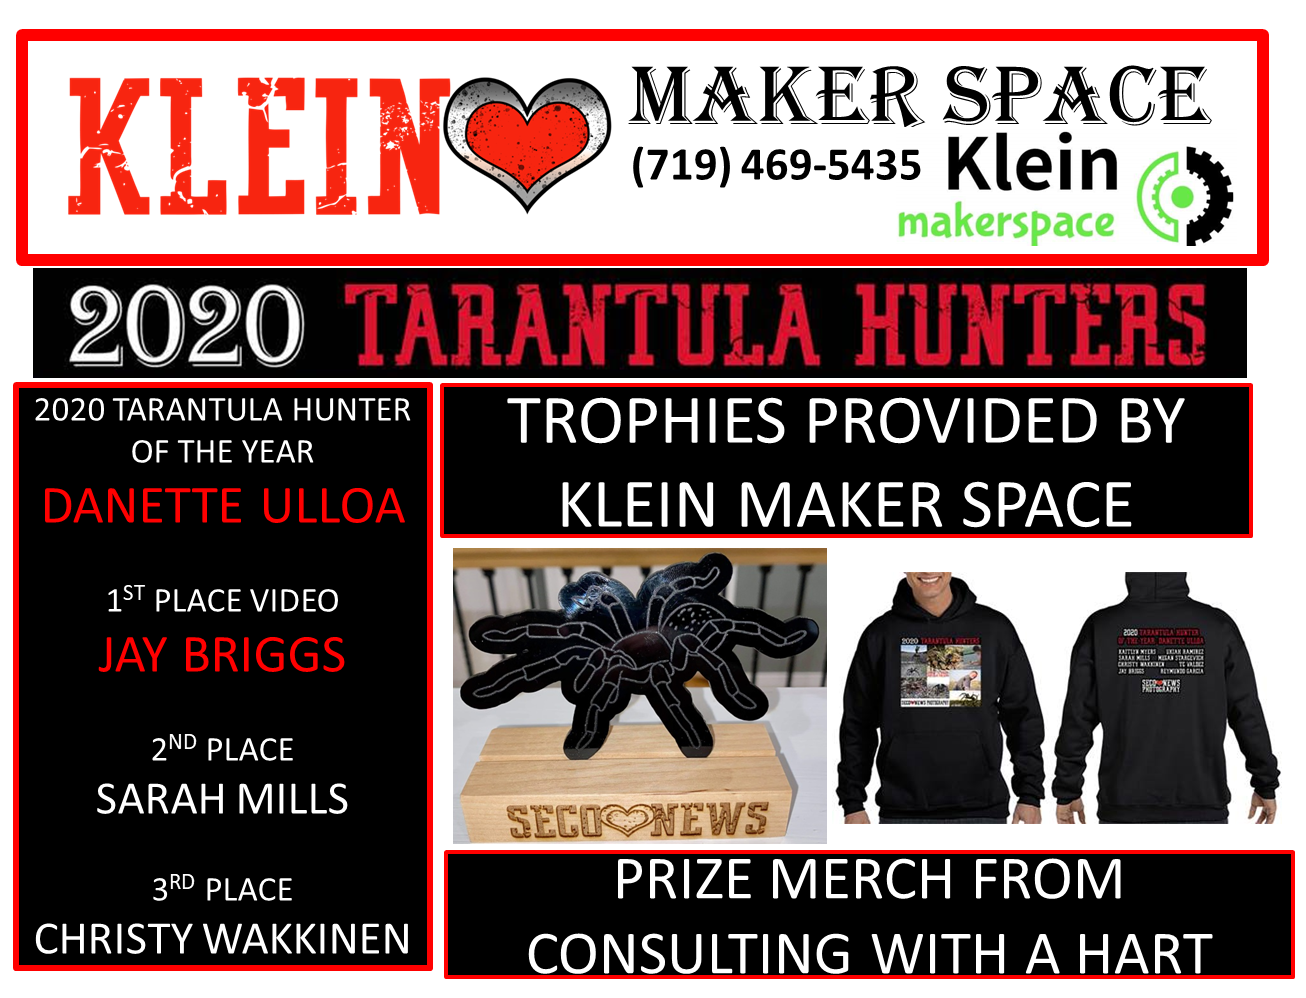 Klein Maker Space Side Bar Ad